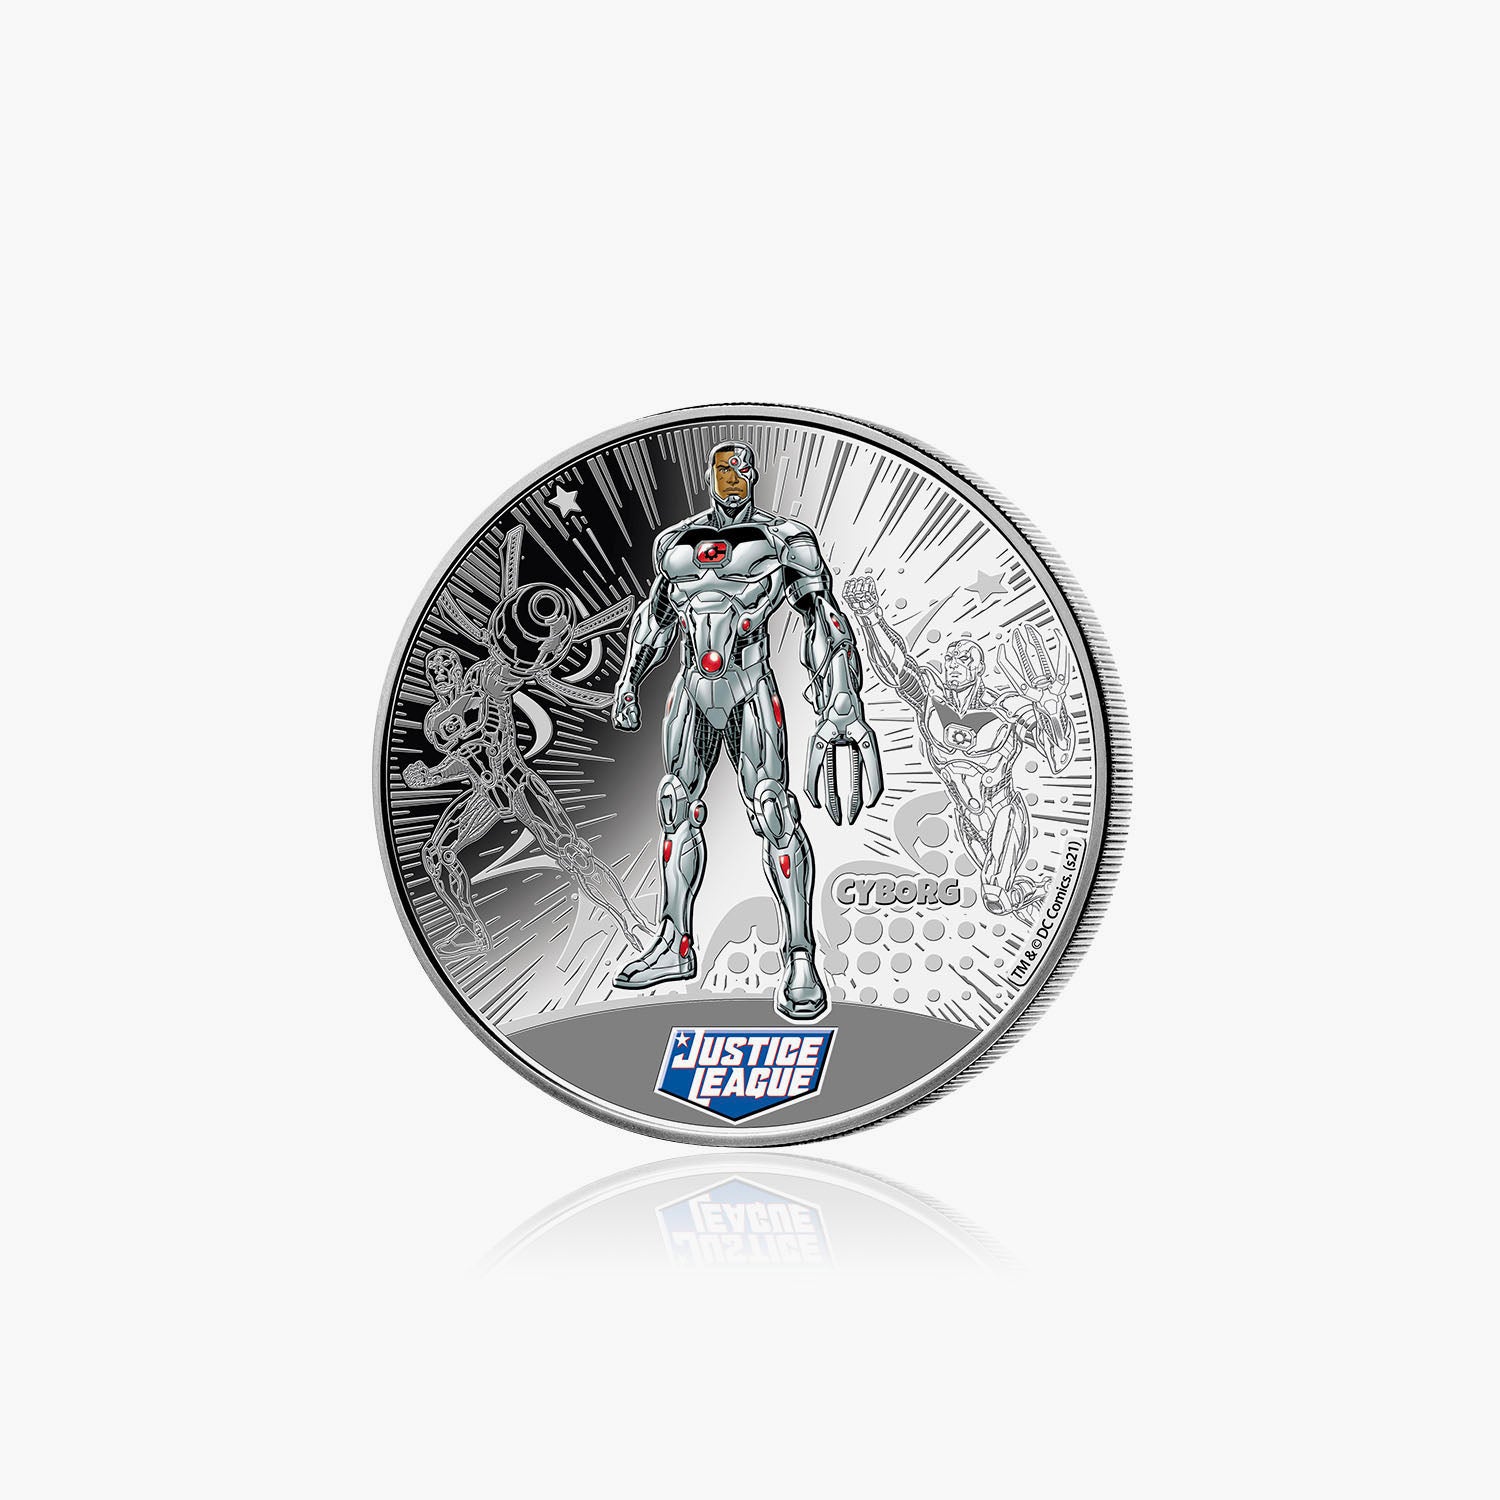 Justice League - Cyborg 1/2oz Silver Coin